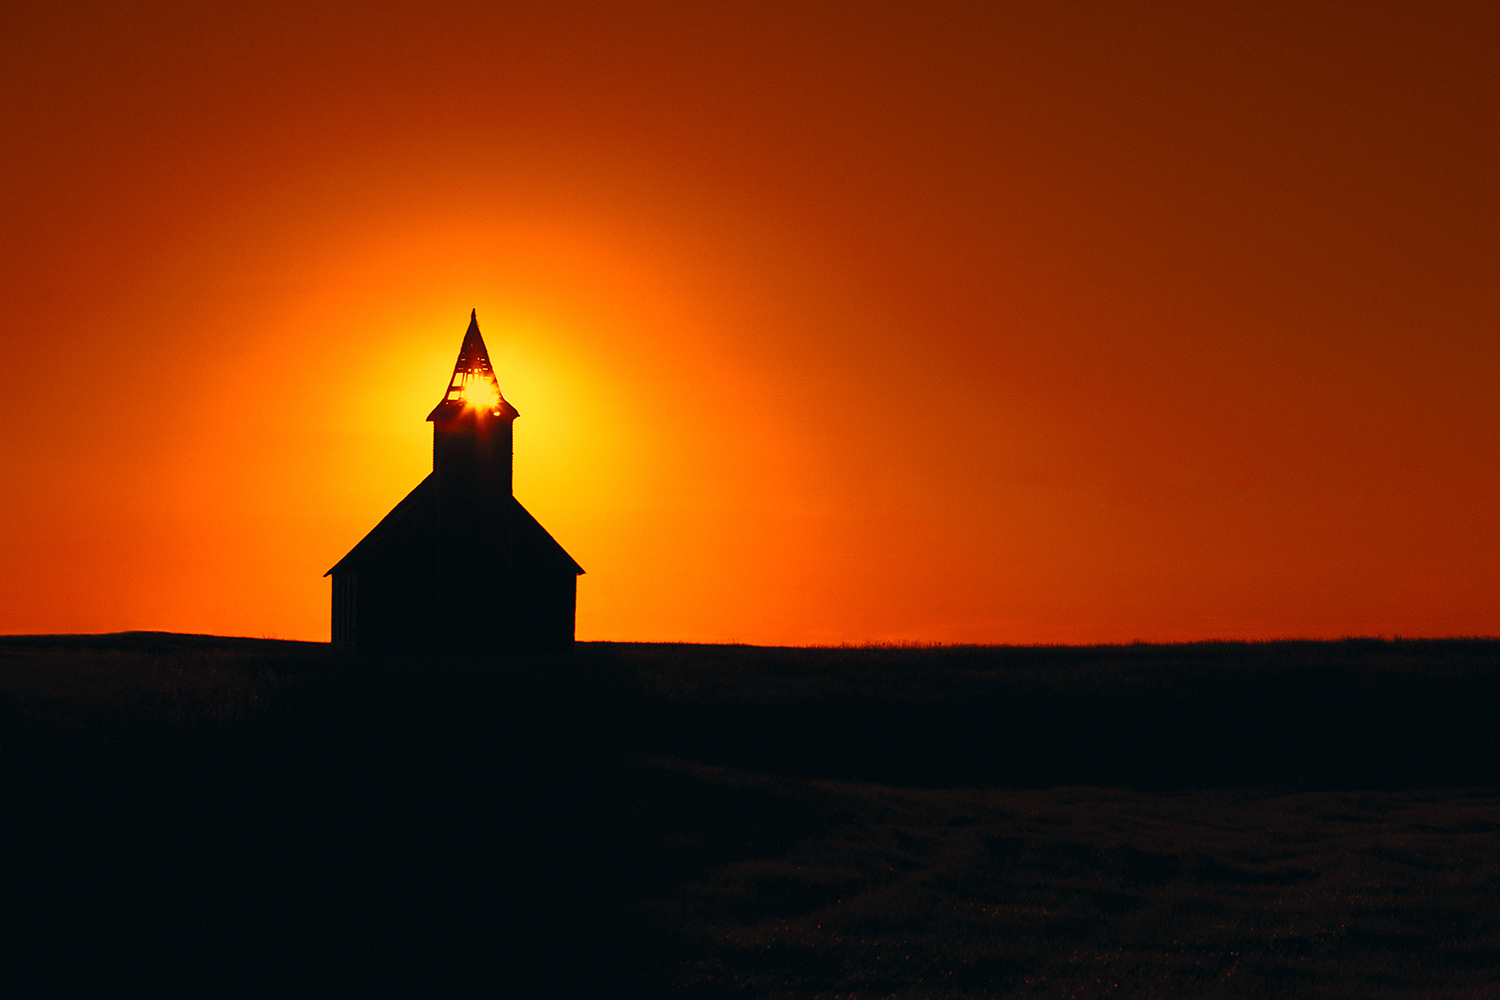 Dooley Church Silhouette